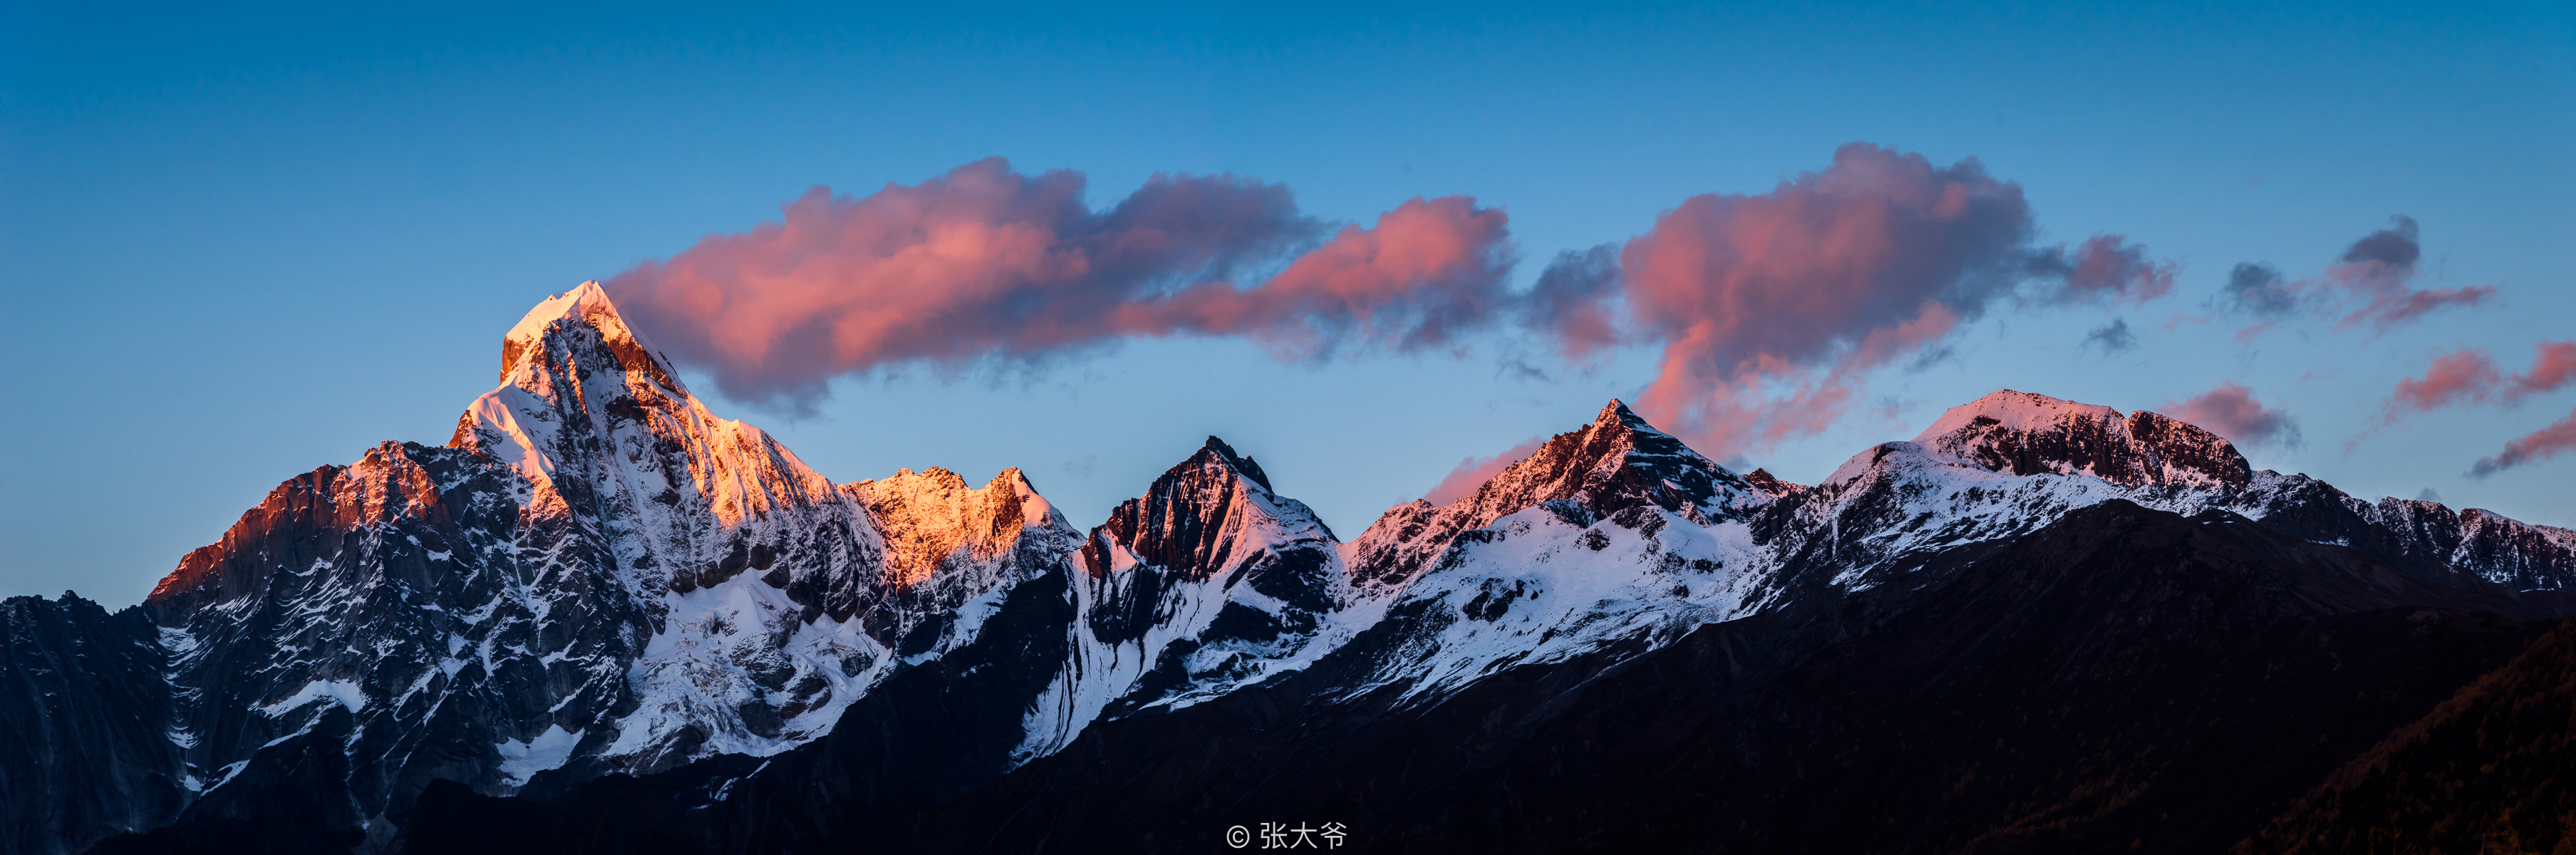 Mount Siguniang · Sunset Golden Mountain